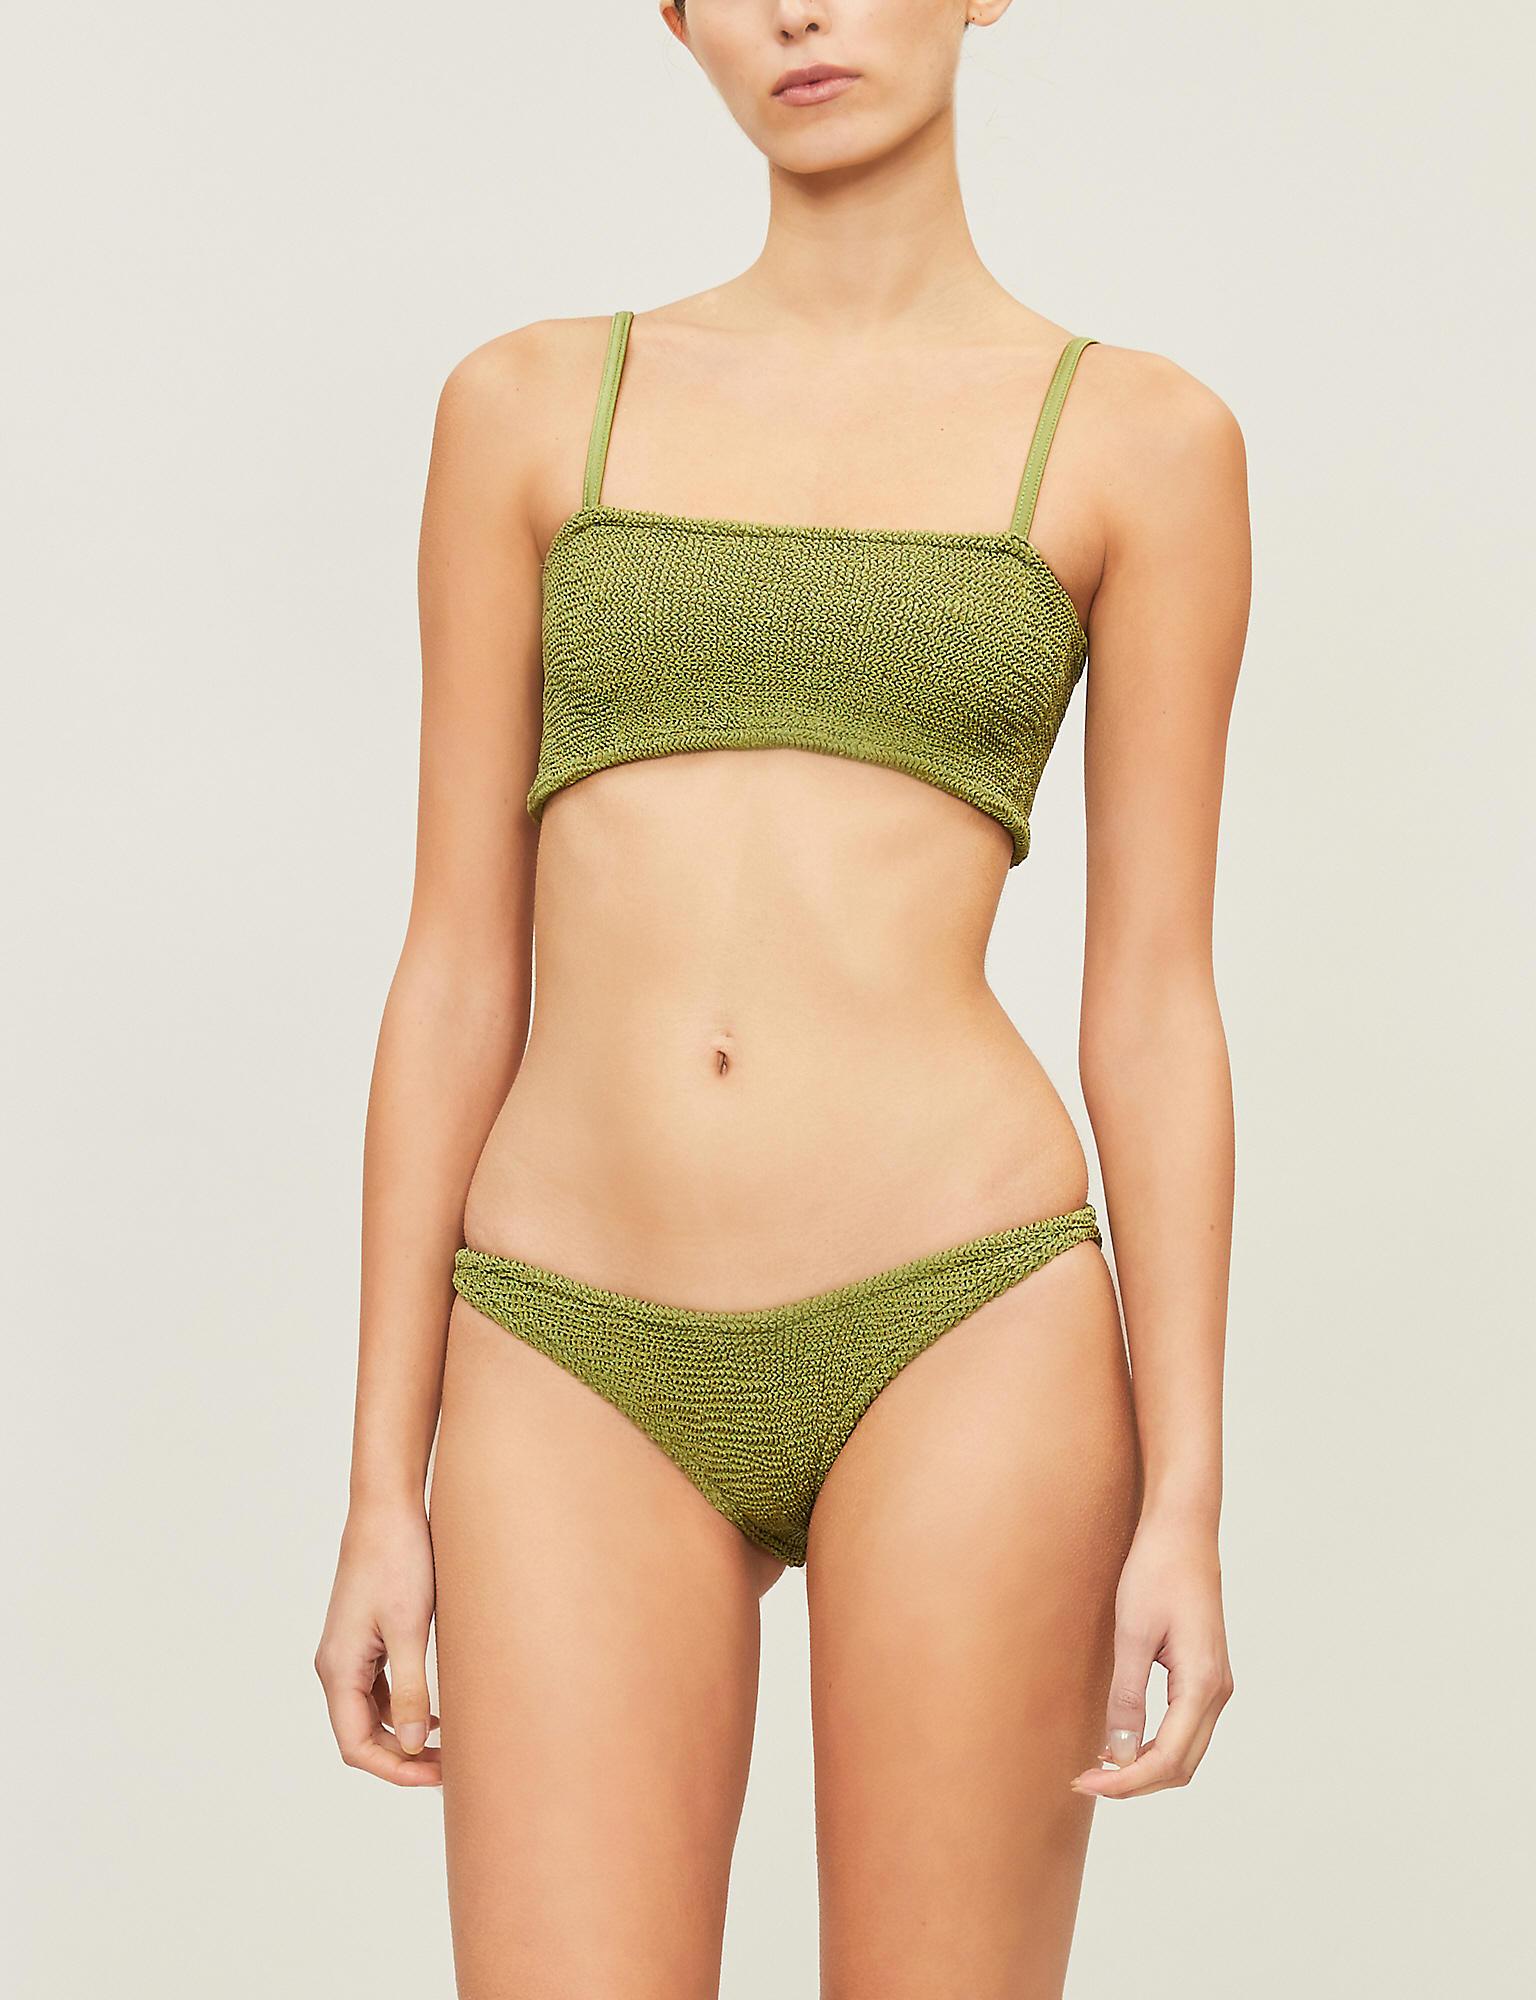 Hunza G Synthetic Gigi Bikini Set in Metallic Moss (Green) - Lyst